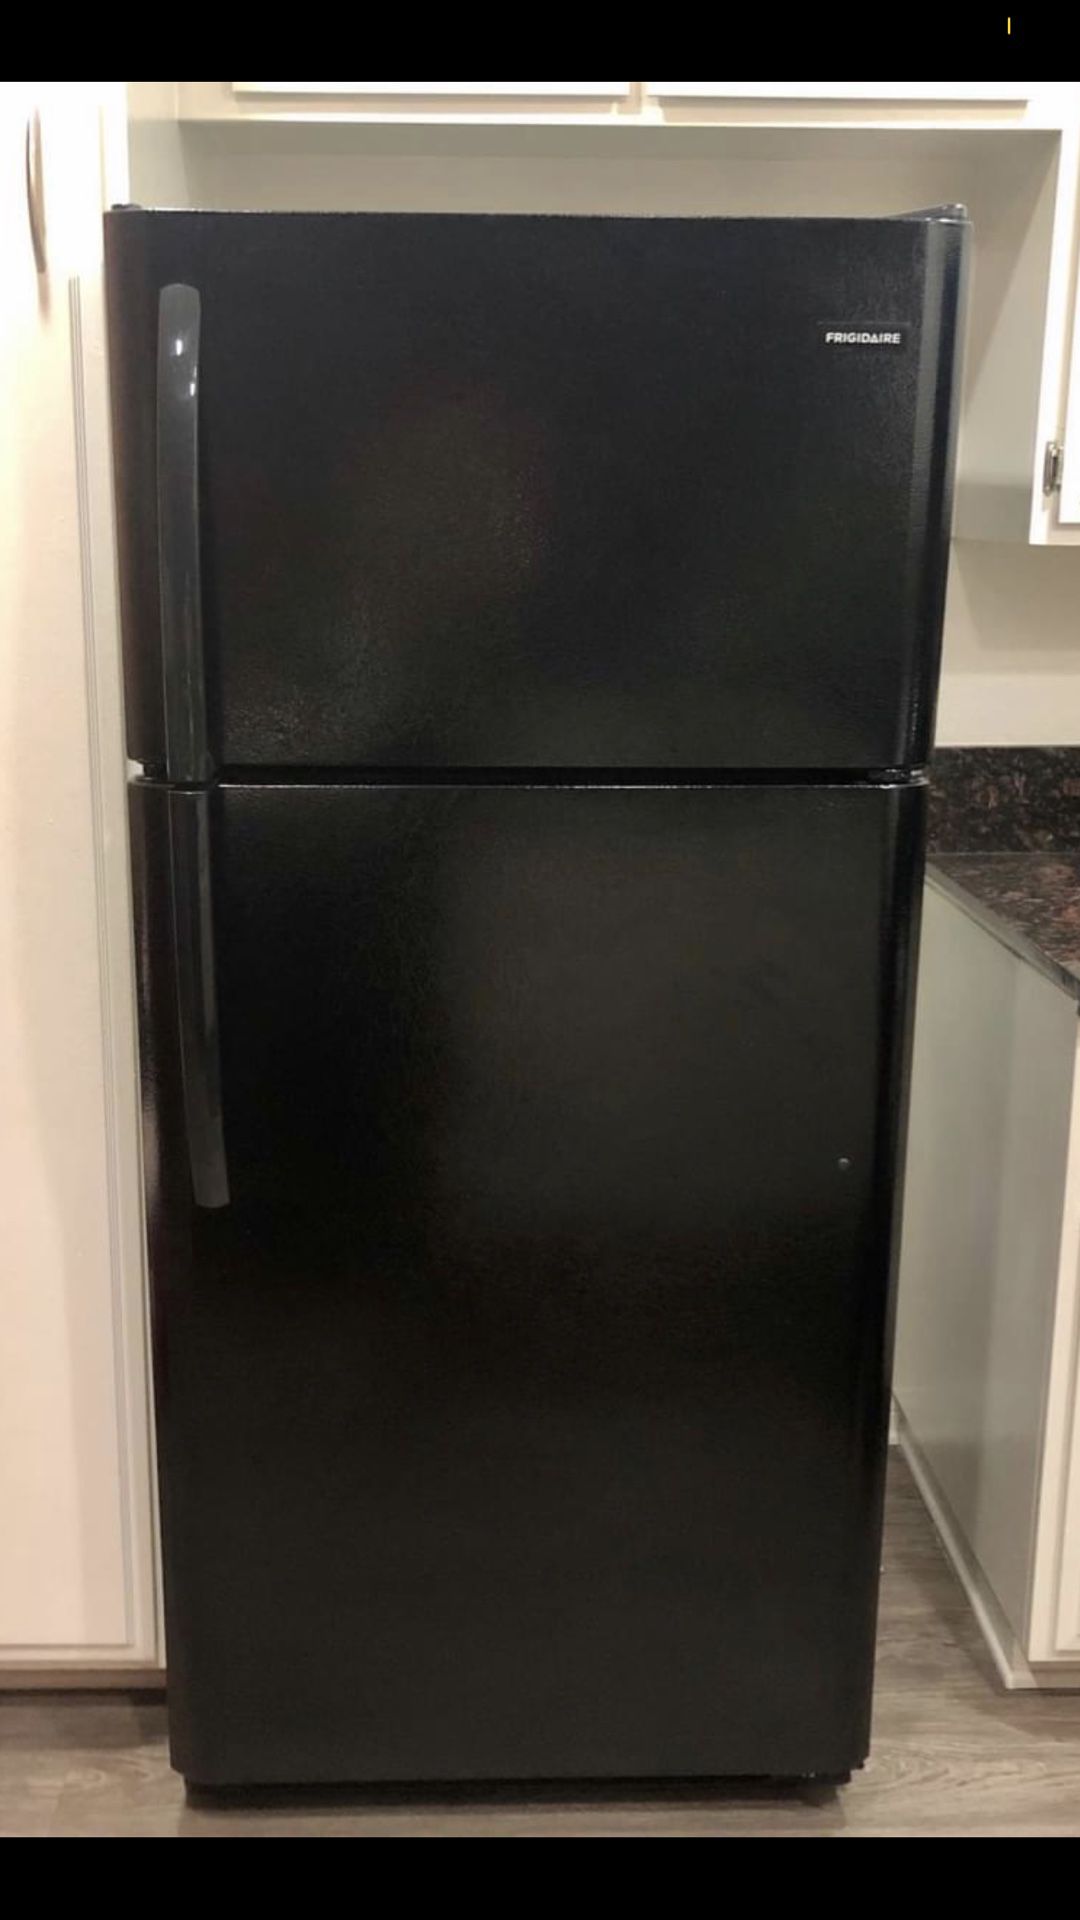 Frigidaire apartment size refrigerator like new